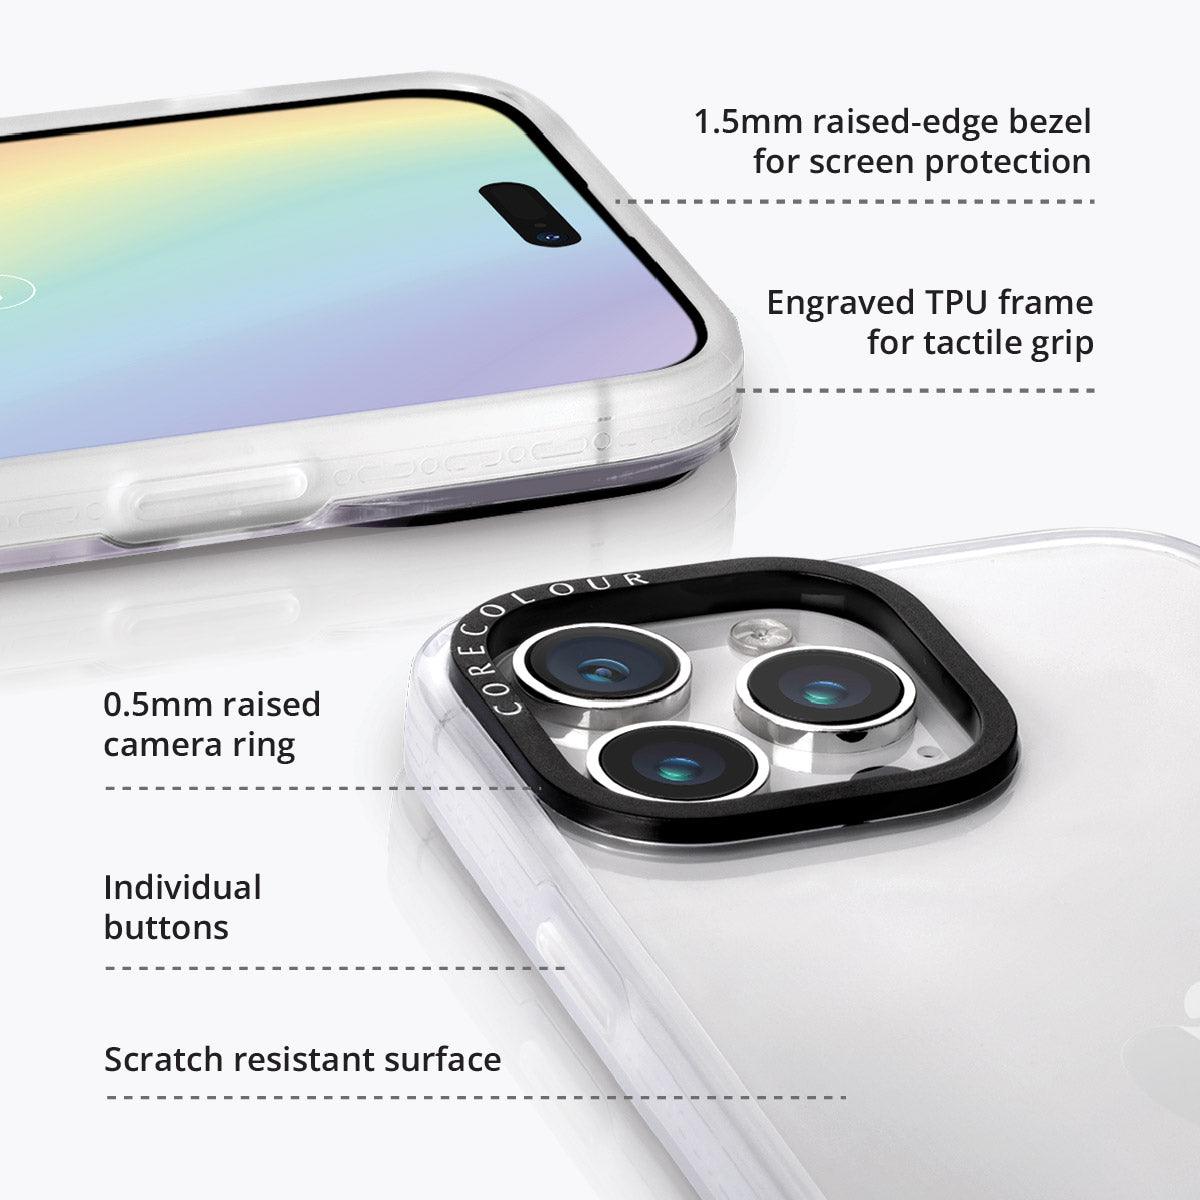 iPhone 12 Pro Pug Minimal Line Phone Case - CORECOLOUR